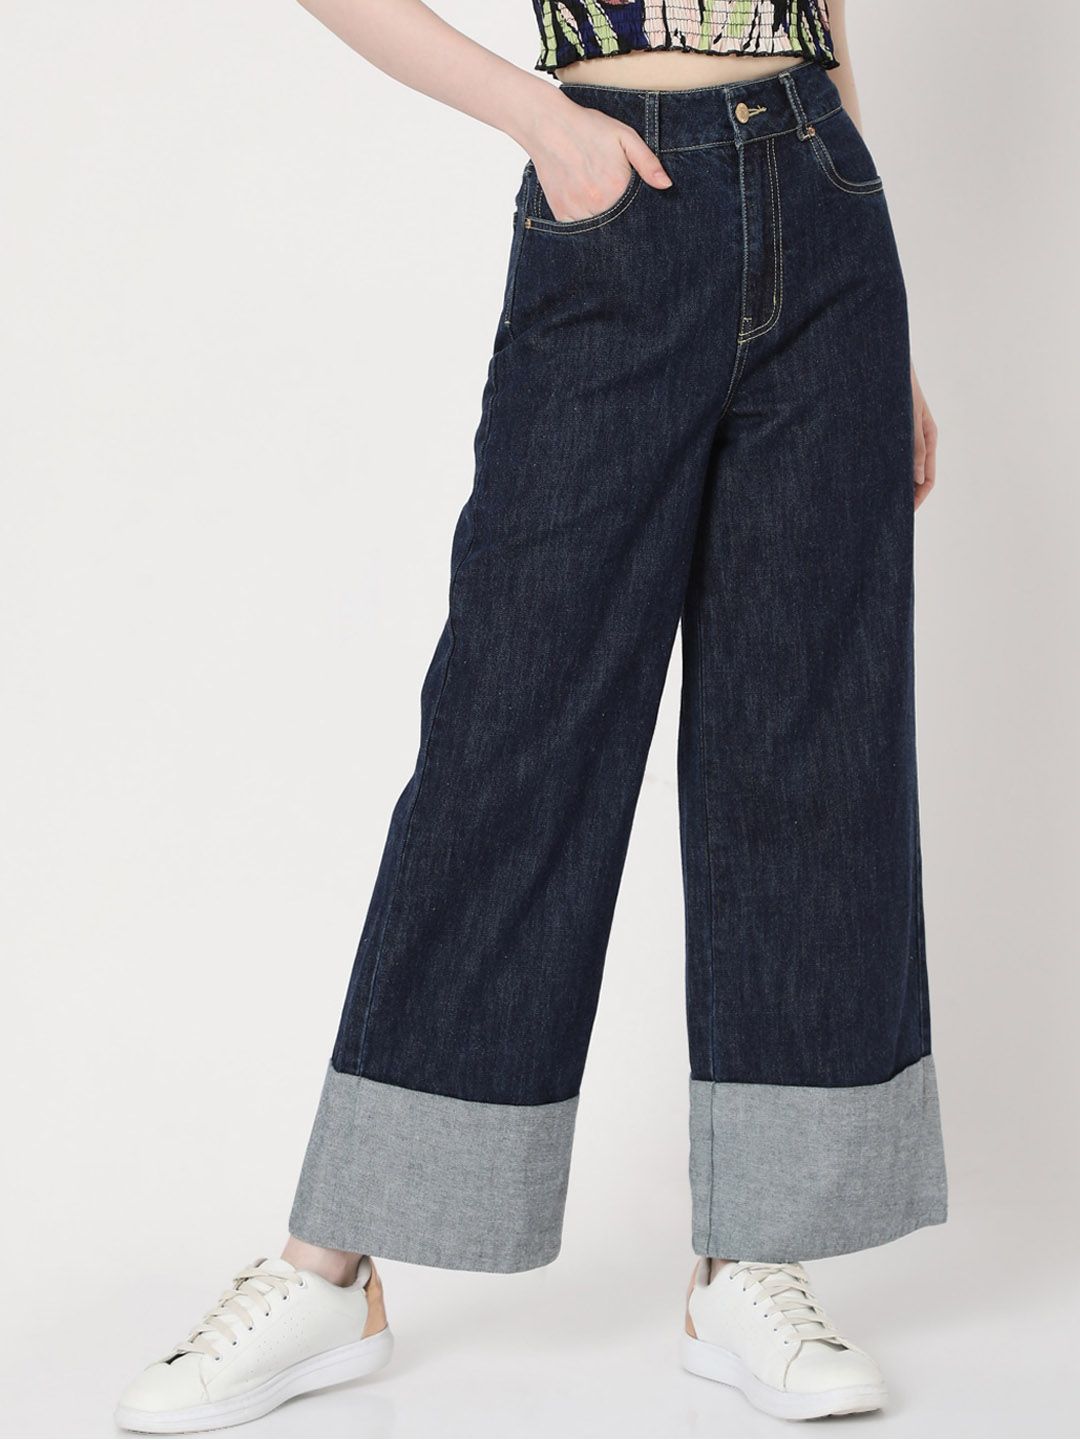 Vero Moda Women Blue Slim Fit High-Rise Jeans Price in India